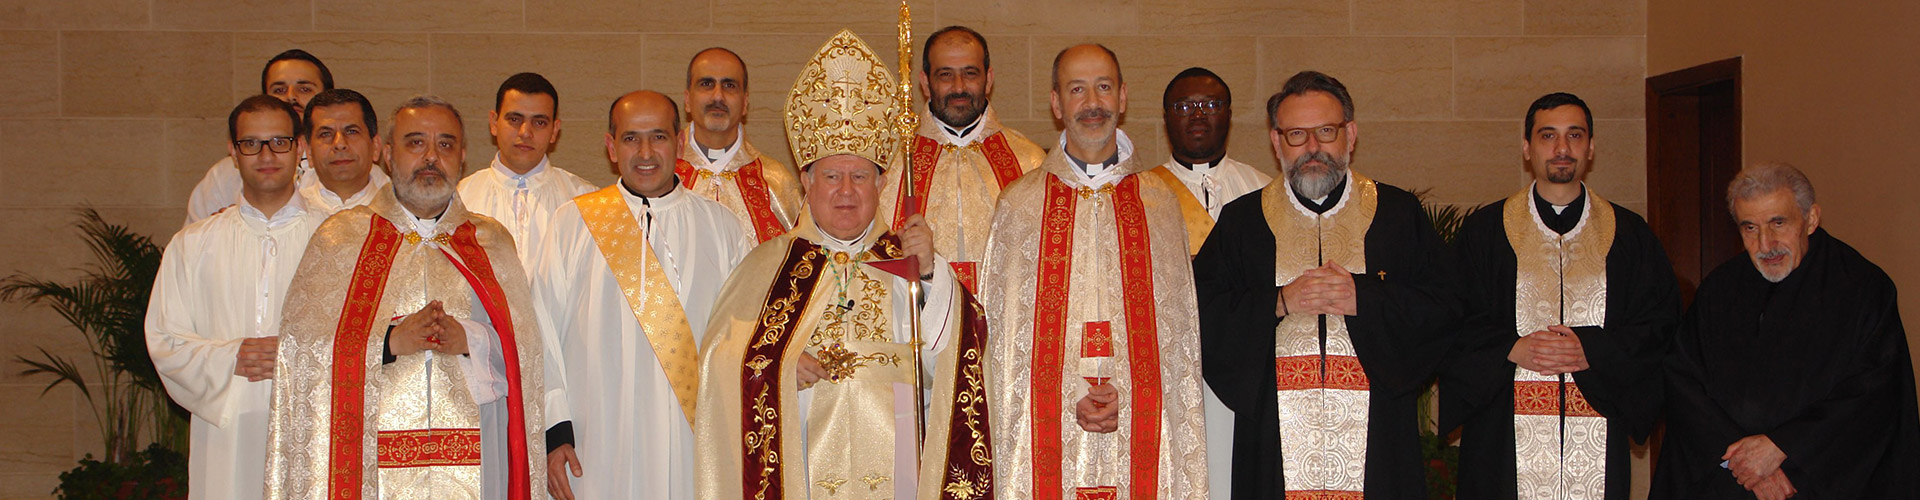 Sous-diaconat de Nassif Aoun